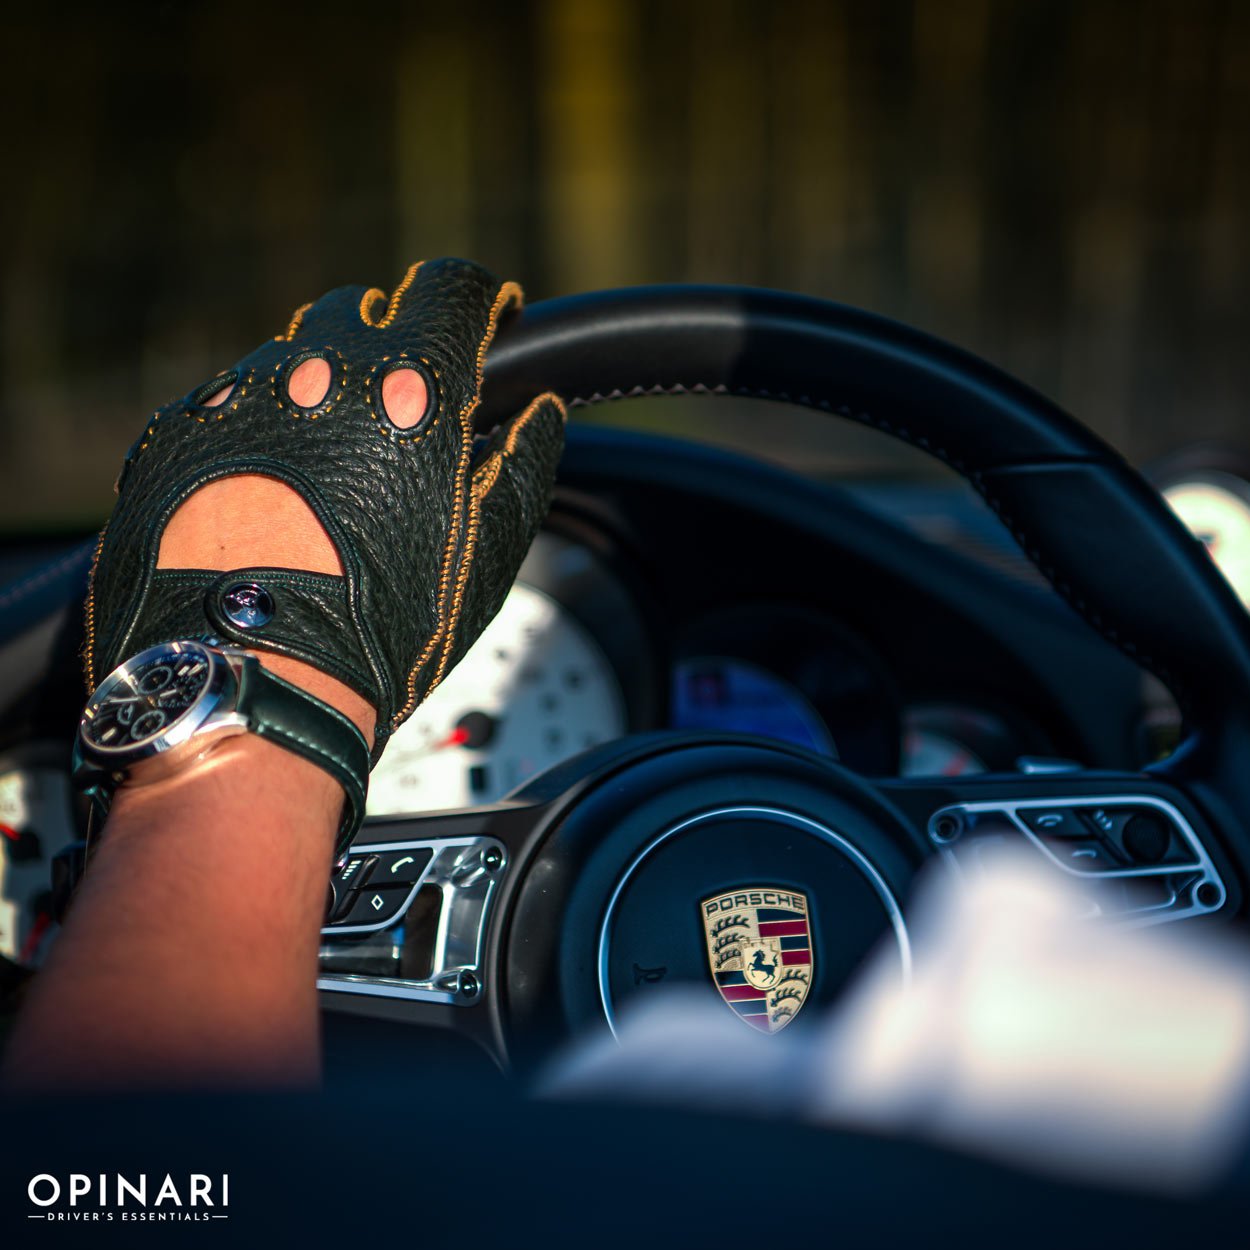 Green porsche driving gloves - made on request - Opinari - Driver's Essentials